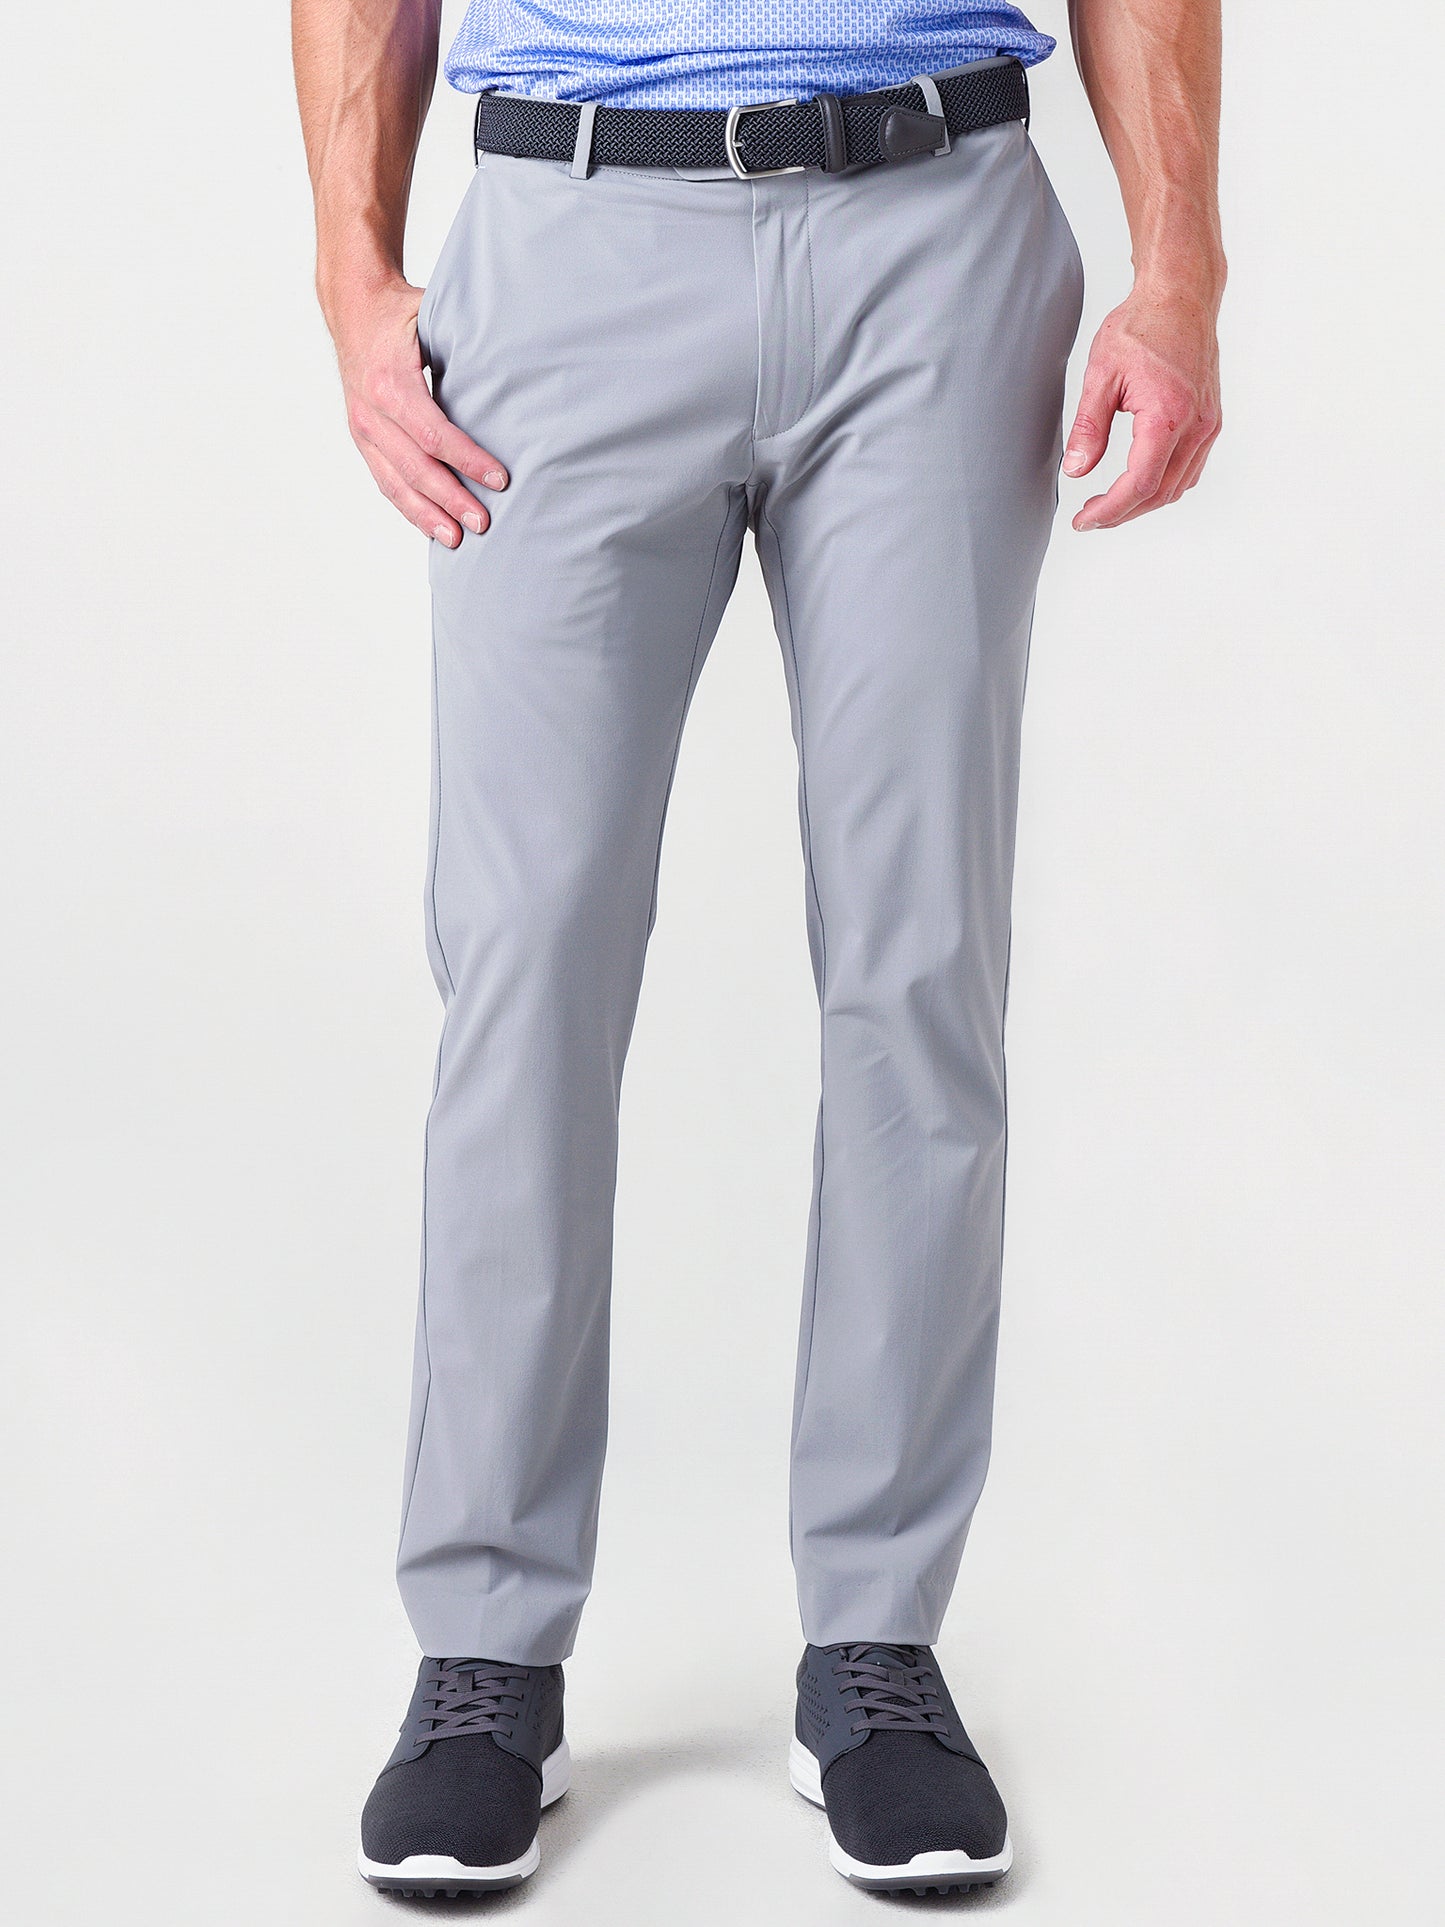 Peter Millar Pants Men's 33 x 32 Crown Sport Polyester Grey Straight Legs -  Helia Beer Co